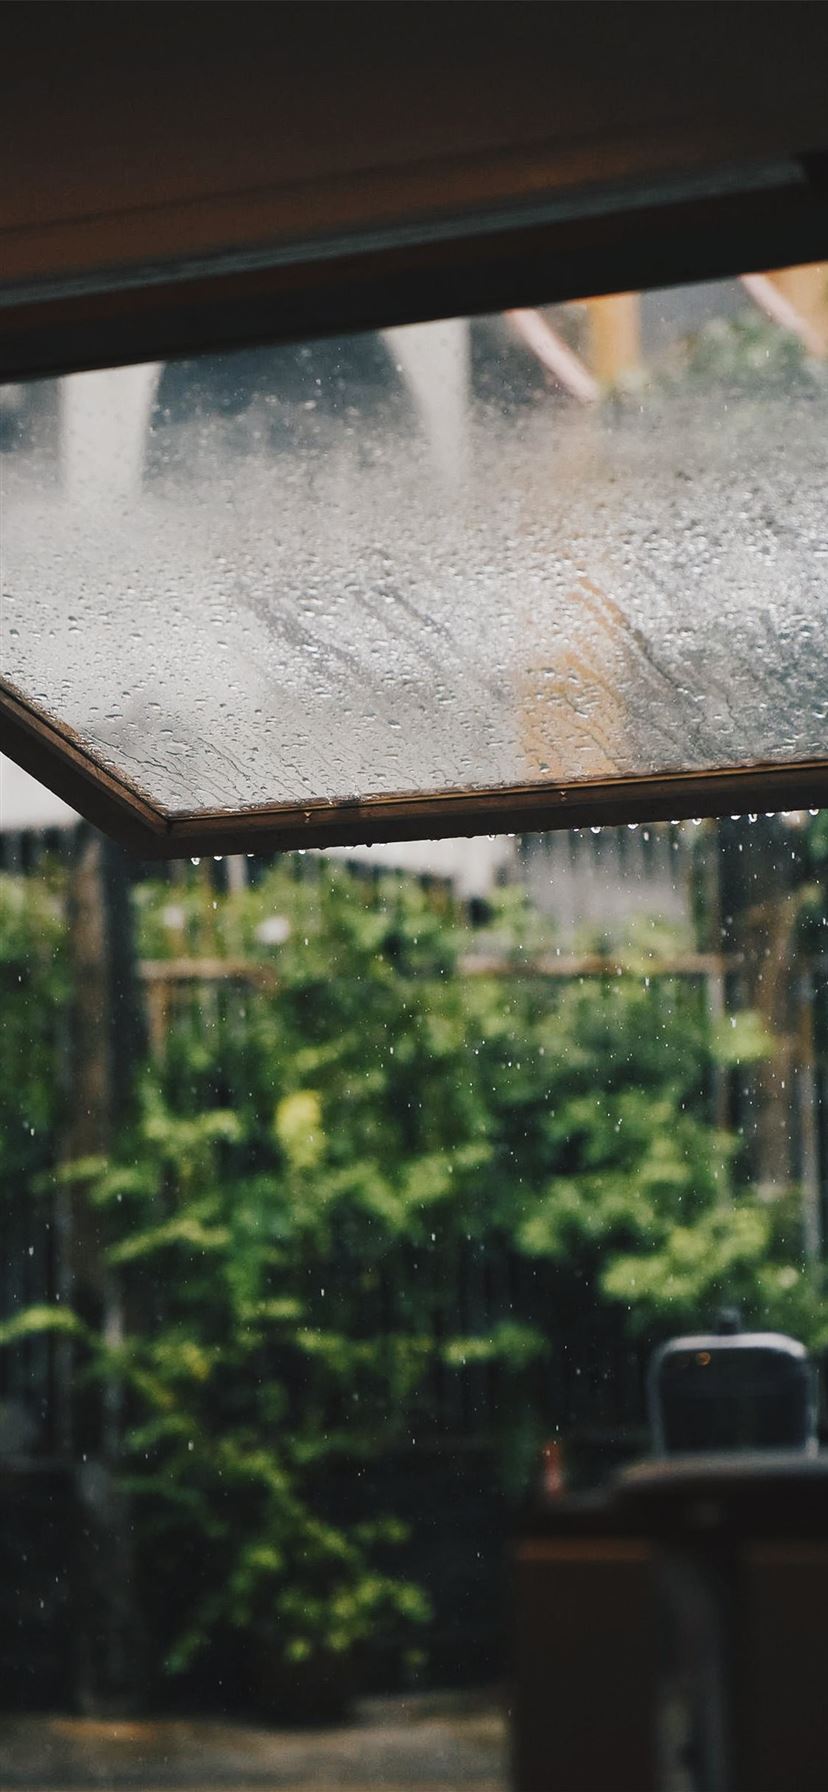 rain drops on window glass iPhone 11 Wallpaper Free Download